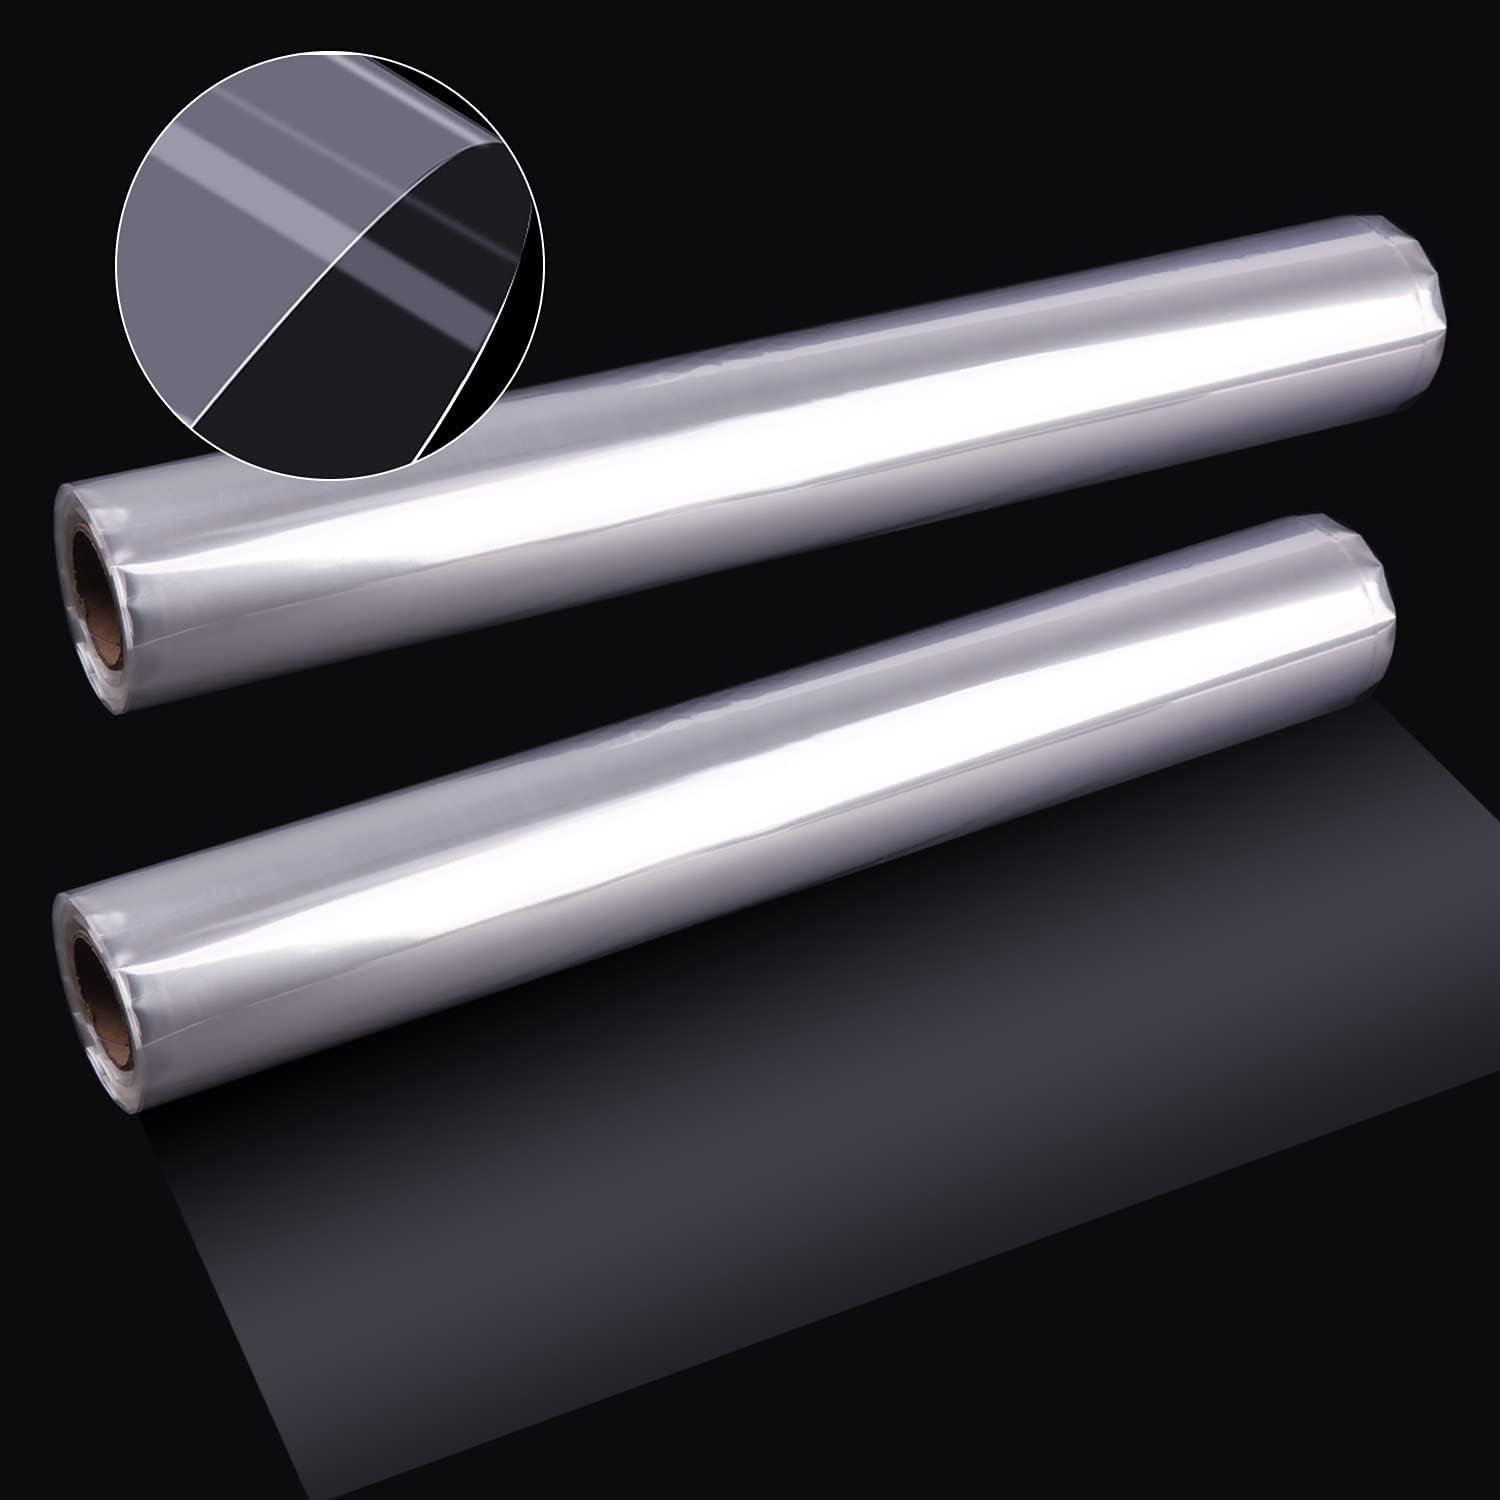 Metallic Cellophane - Silver - 1 sheet - 750 x 500mm – The Crafty